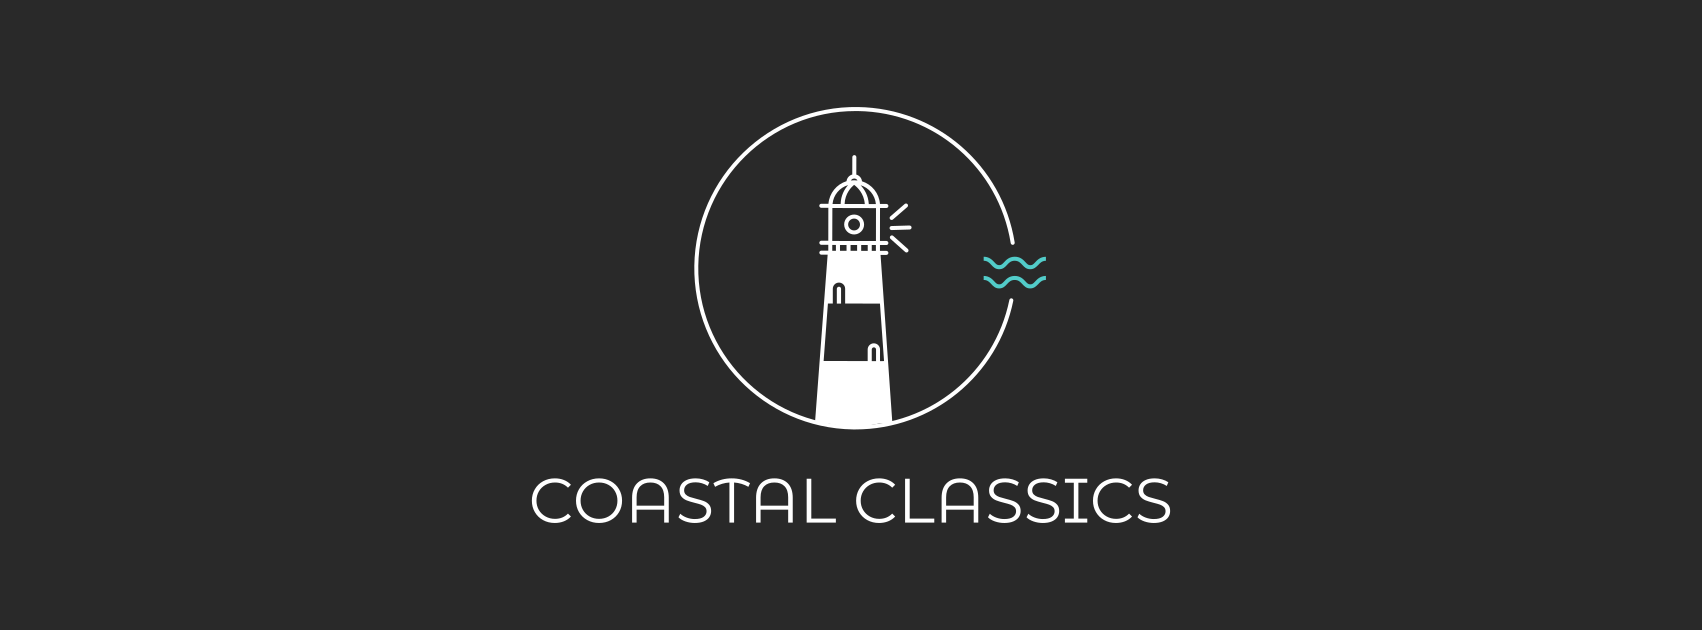 Welcome to the Coast – Coastal Classics